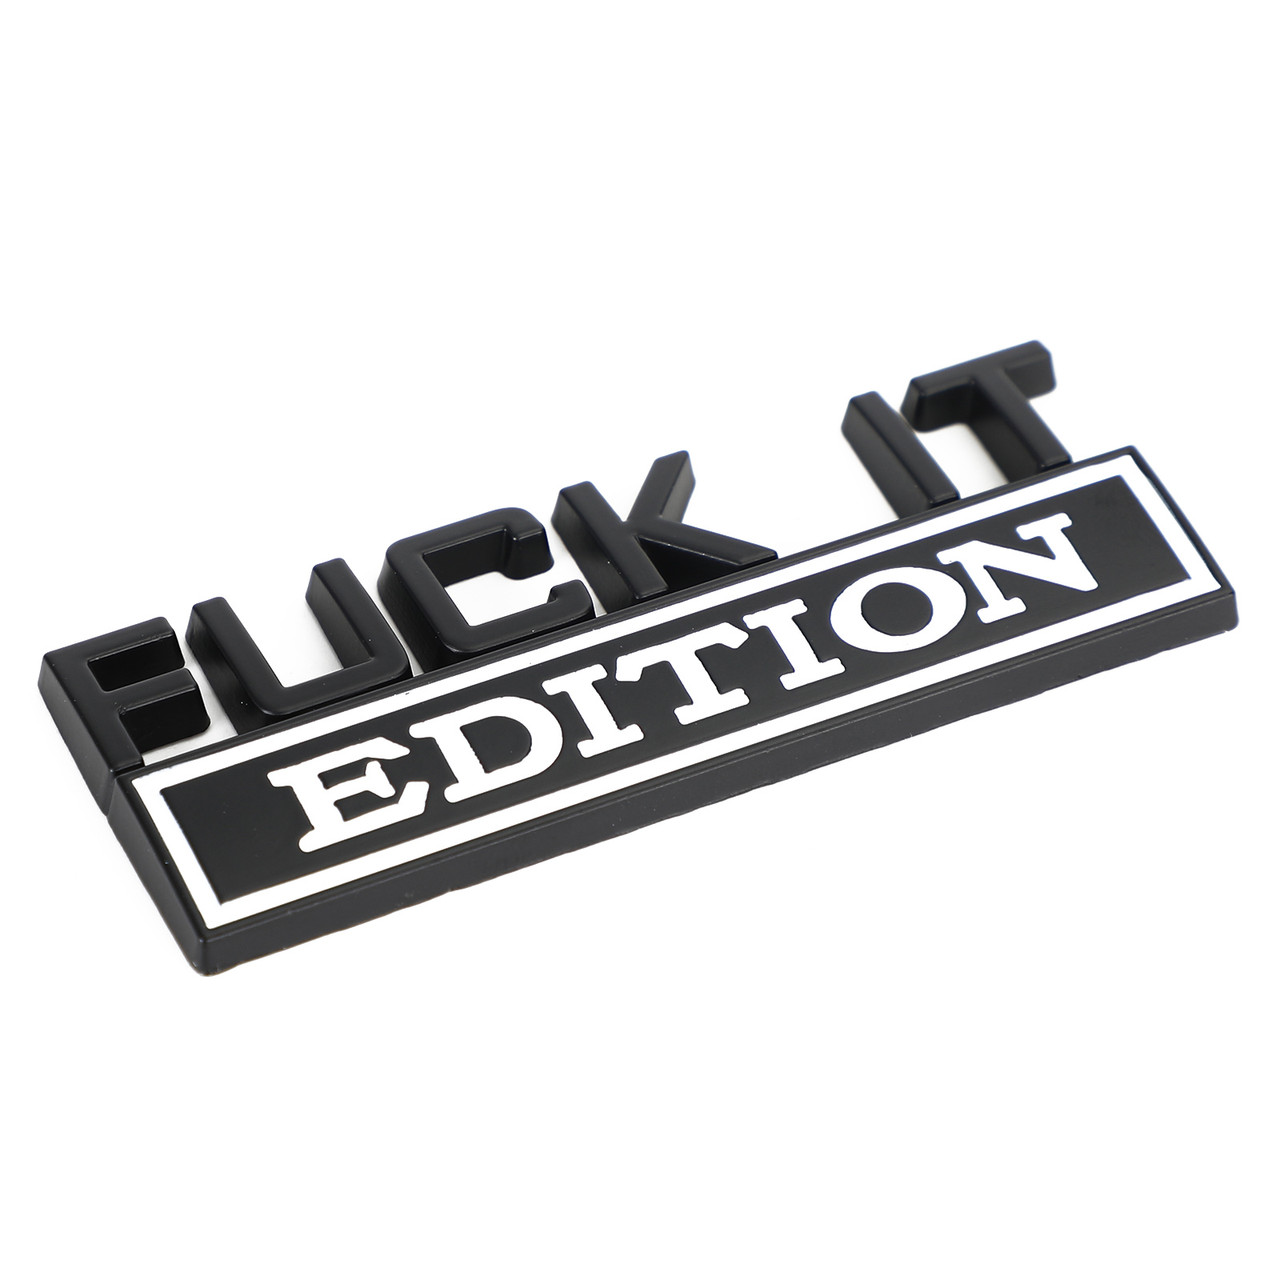 2pc F*CK IT EDITION Car emblem Badges for Chevy Honda Toyota Ford Black/White